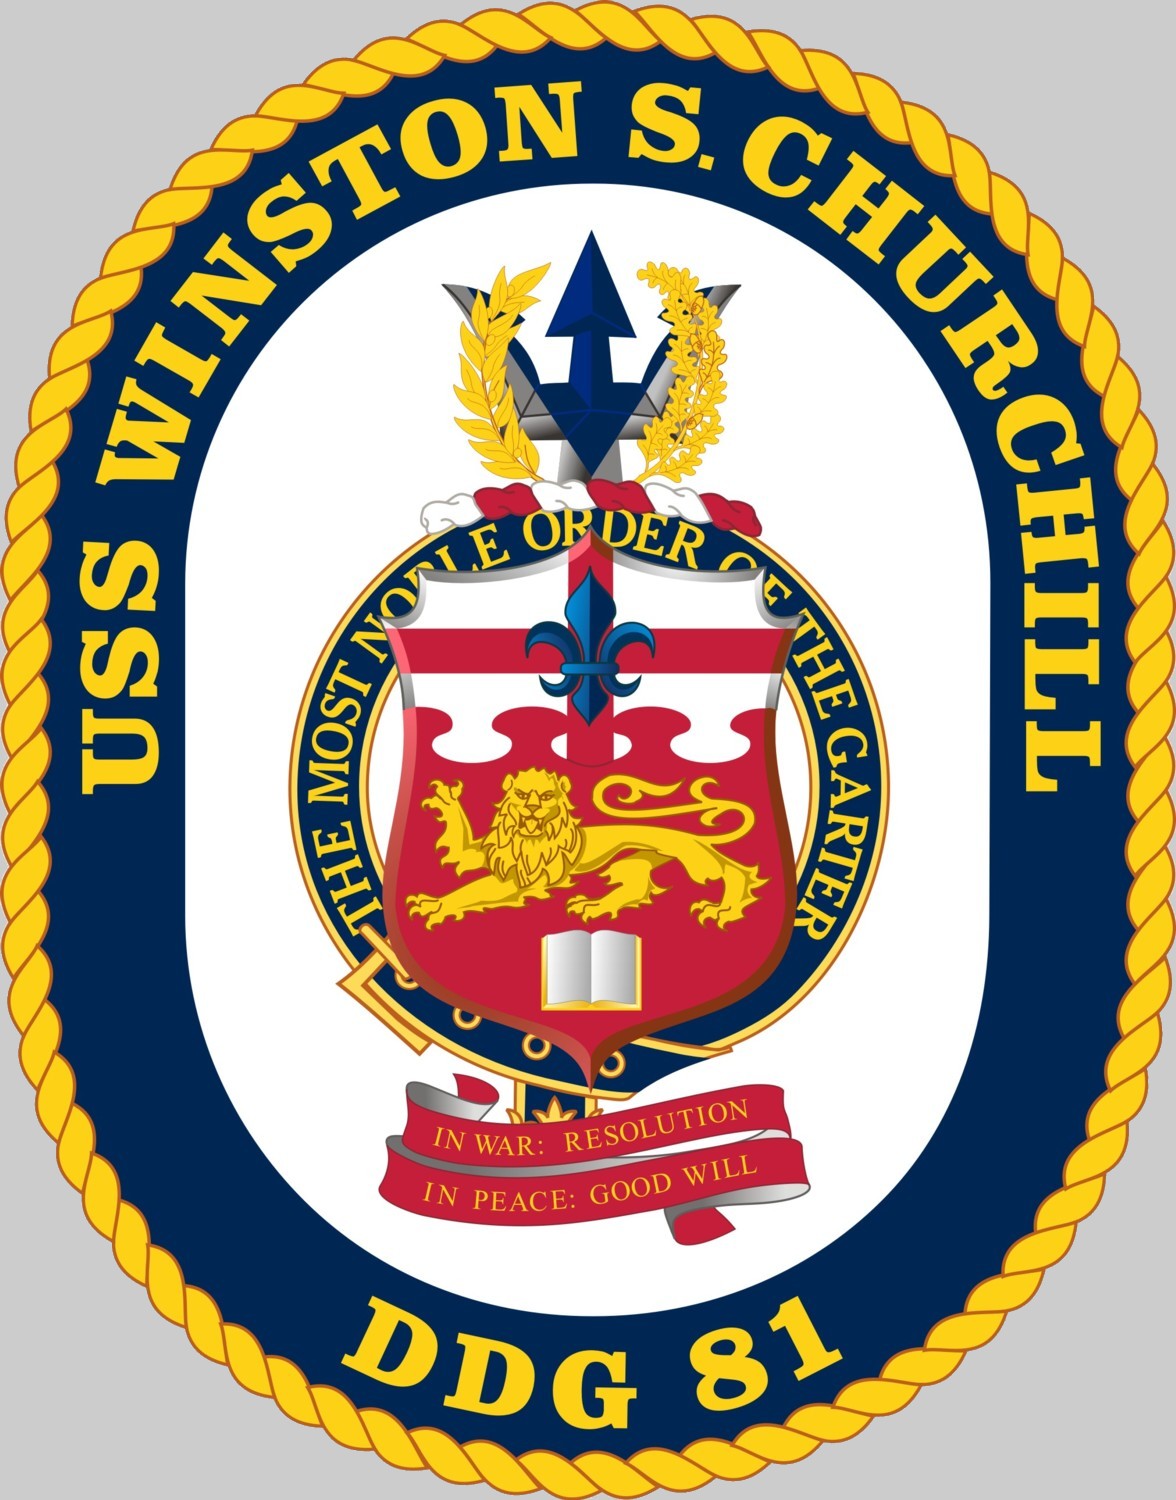 ddg-81 uss winston s. churchill insignia crest patch badge destroyer us navy 03c